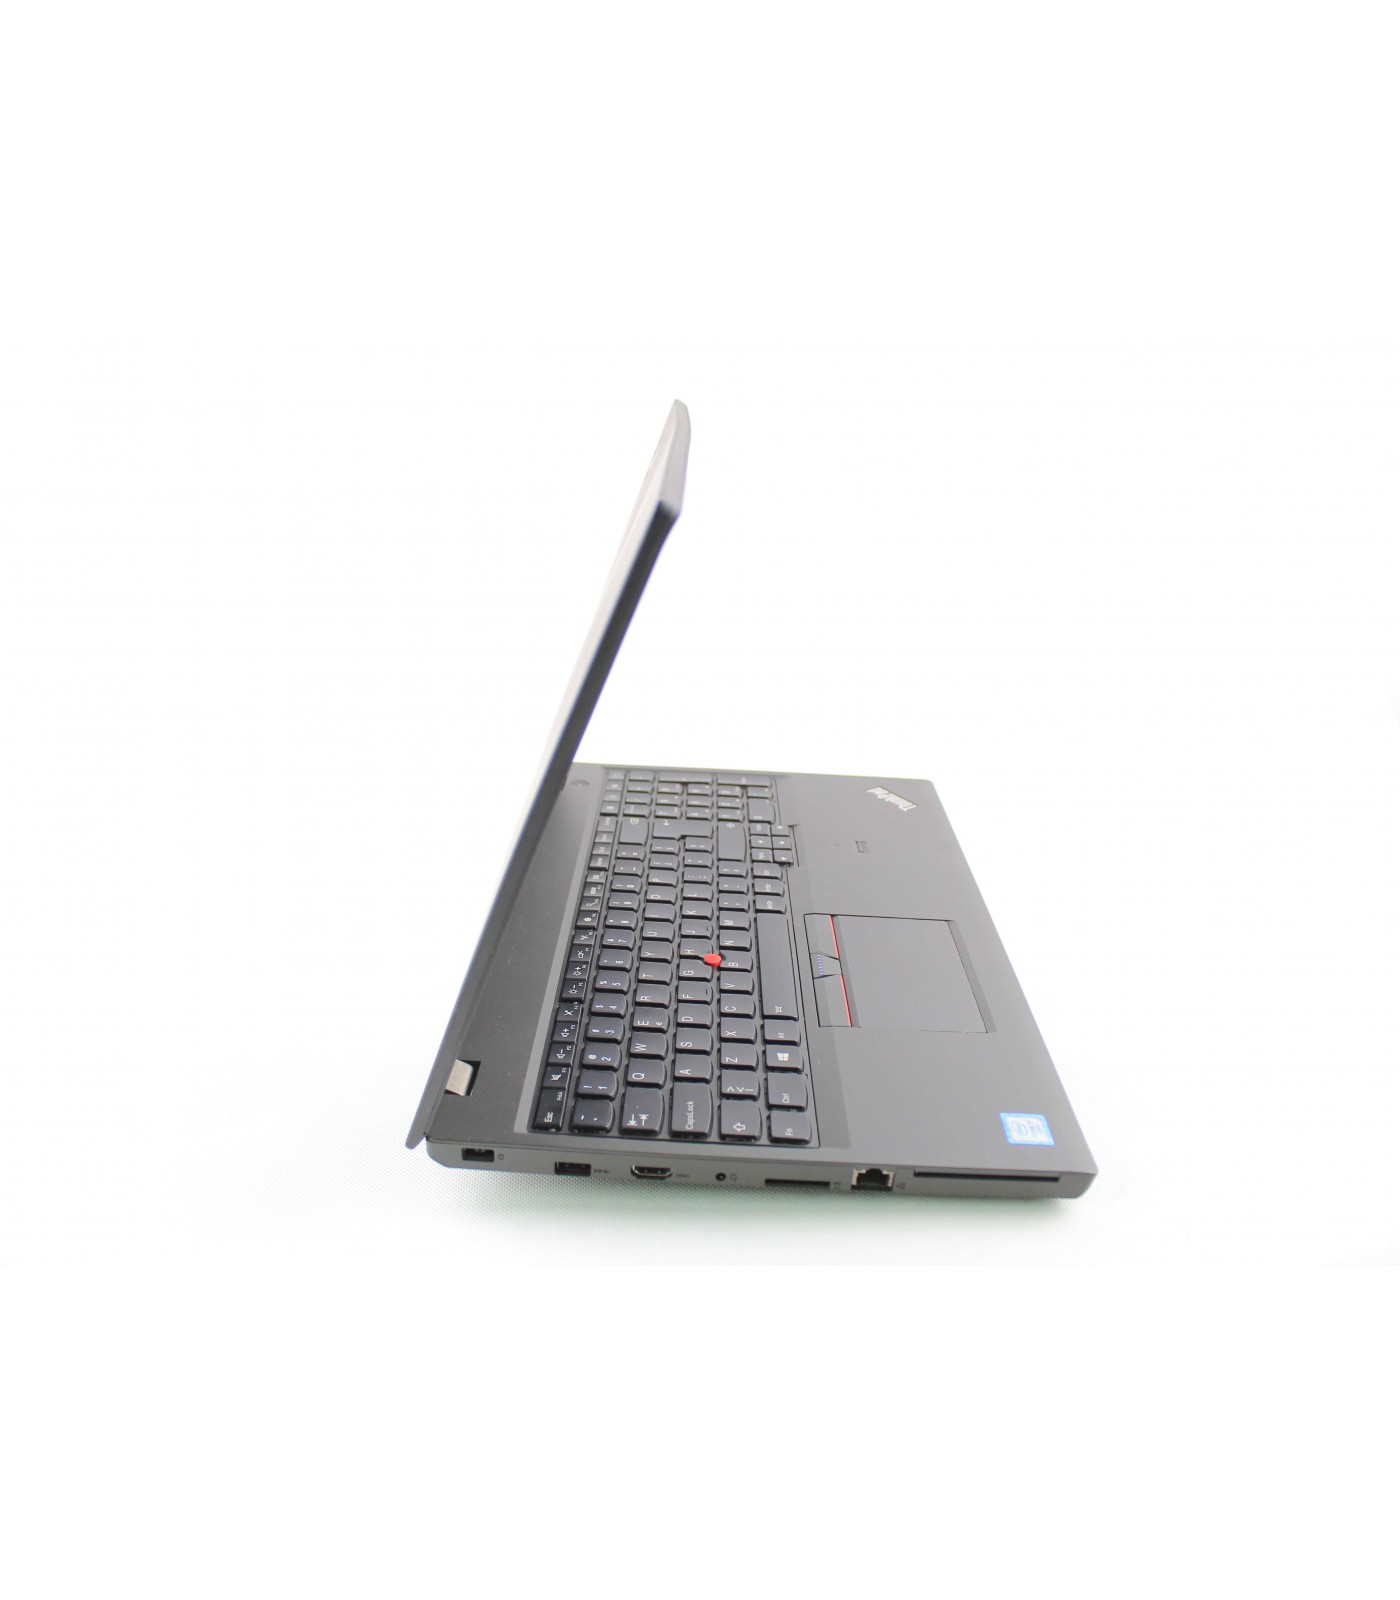 Poleasingowy laptop Lenovo ThinkPad P50s z Intel Core i7-6500U i kartą graficzną Nvidia Quadro M500M, Klasa A-